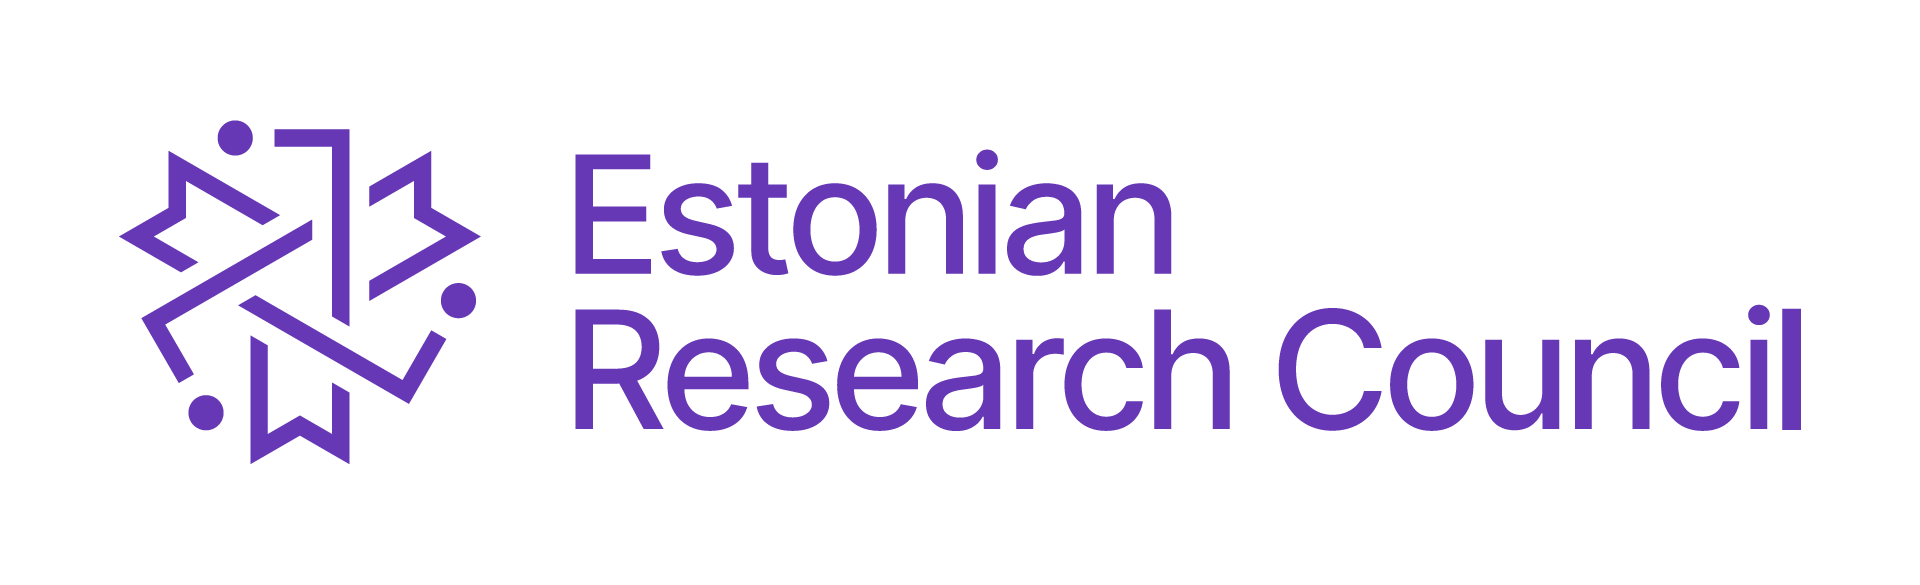 Estonian Research Council ETAG